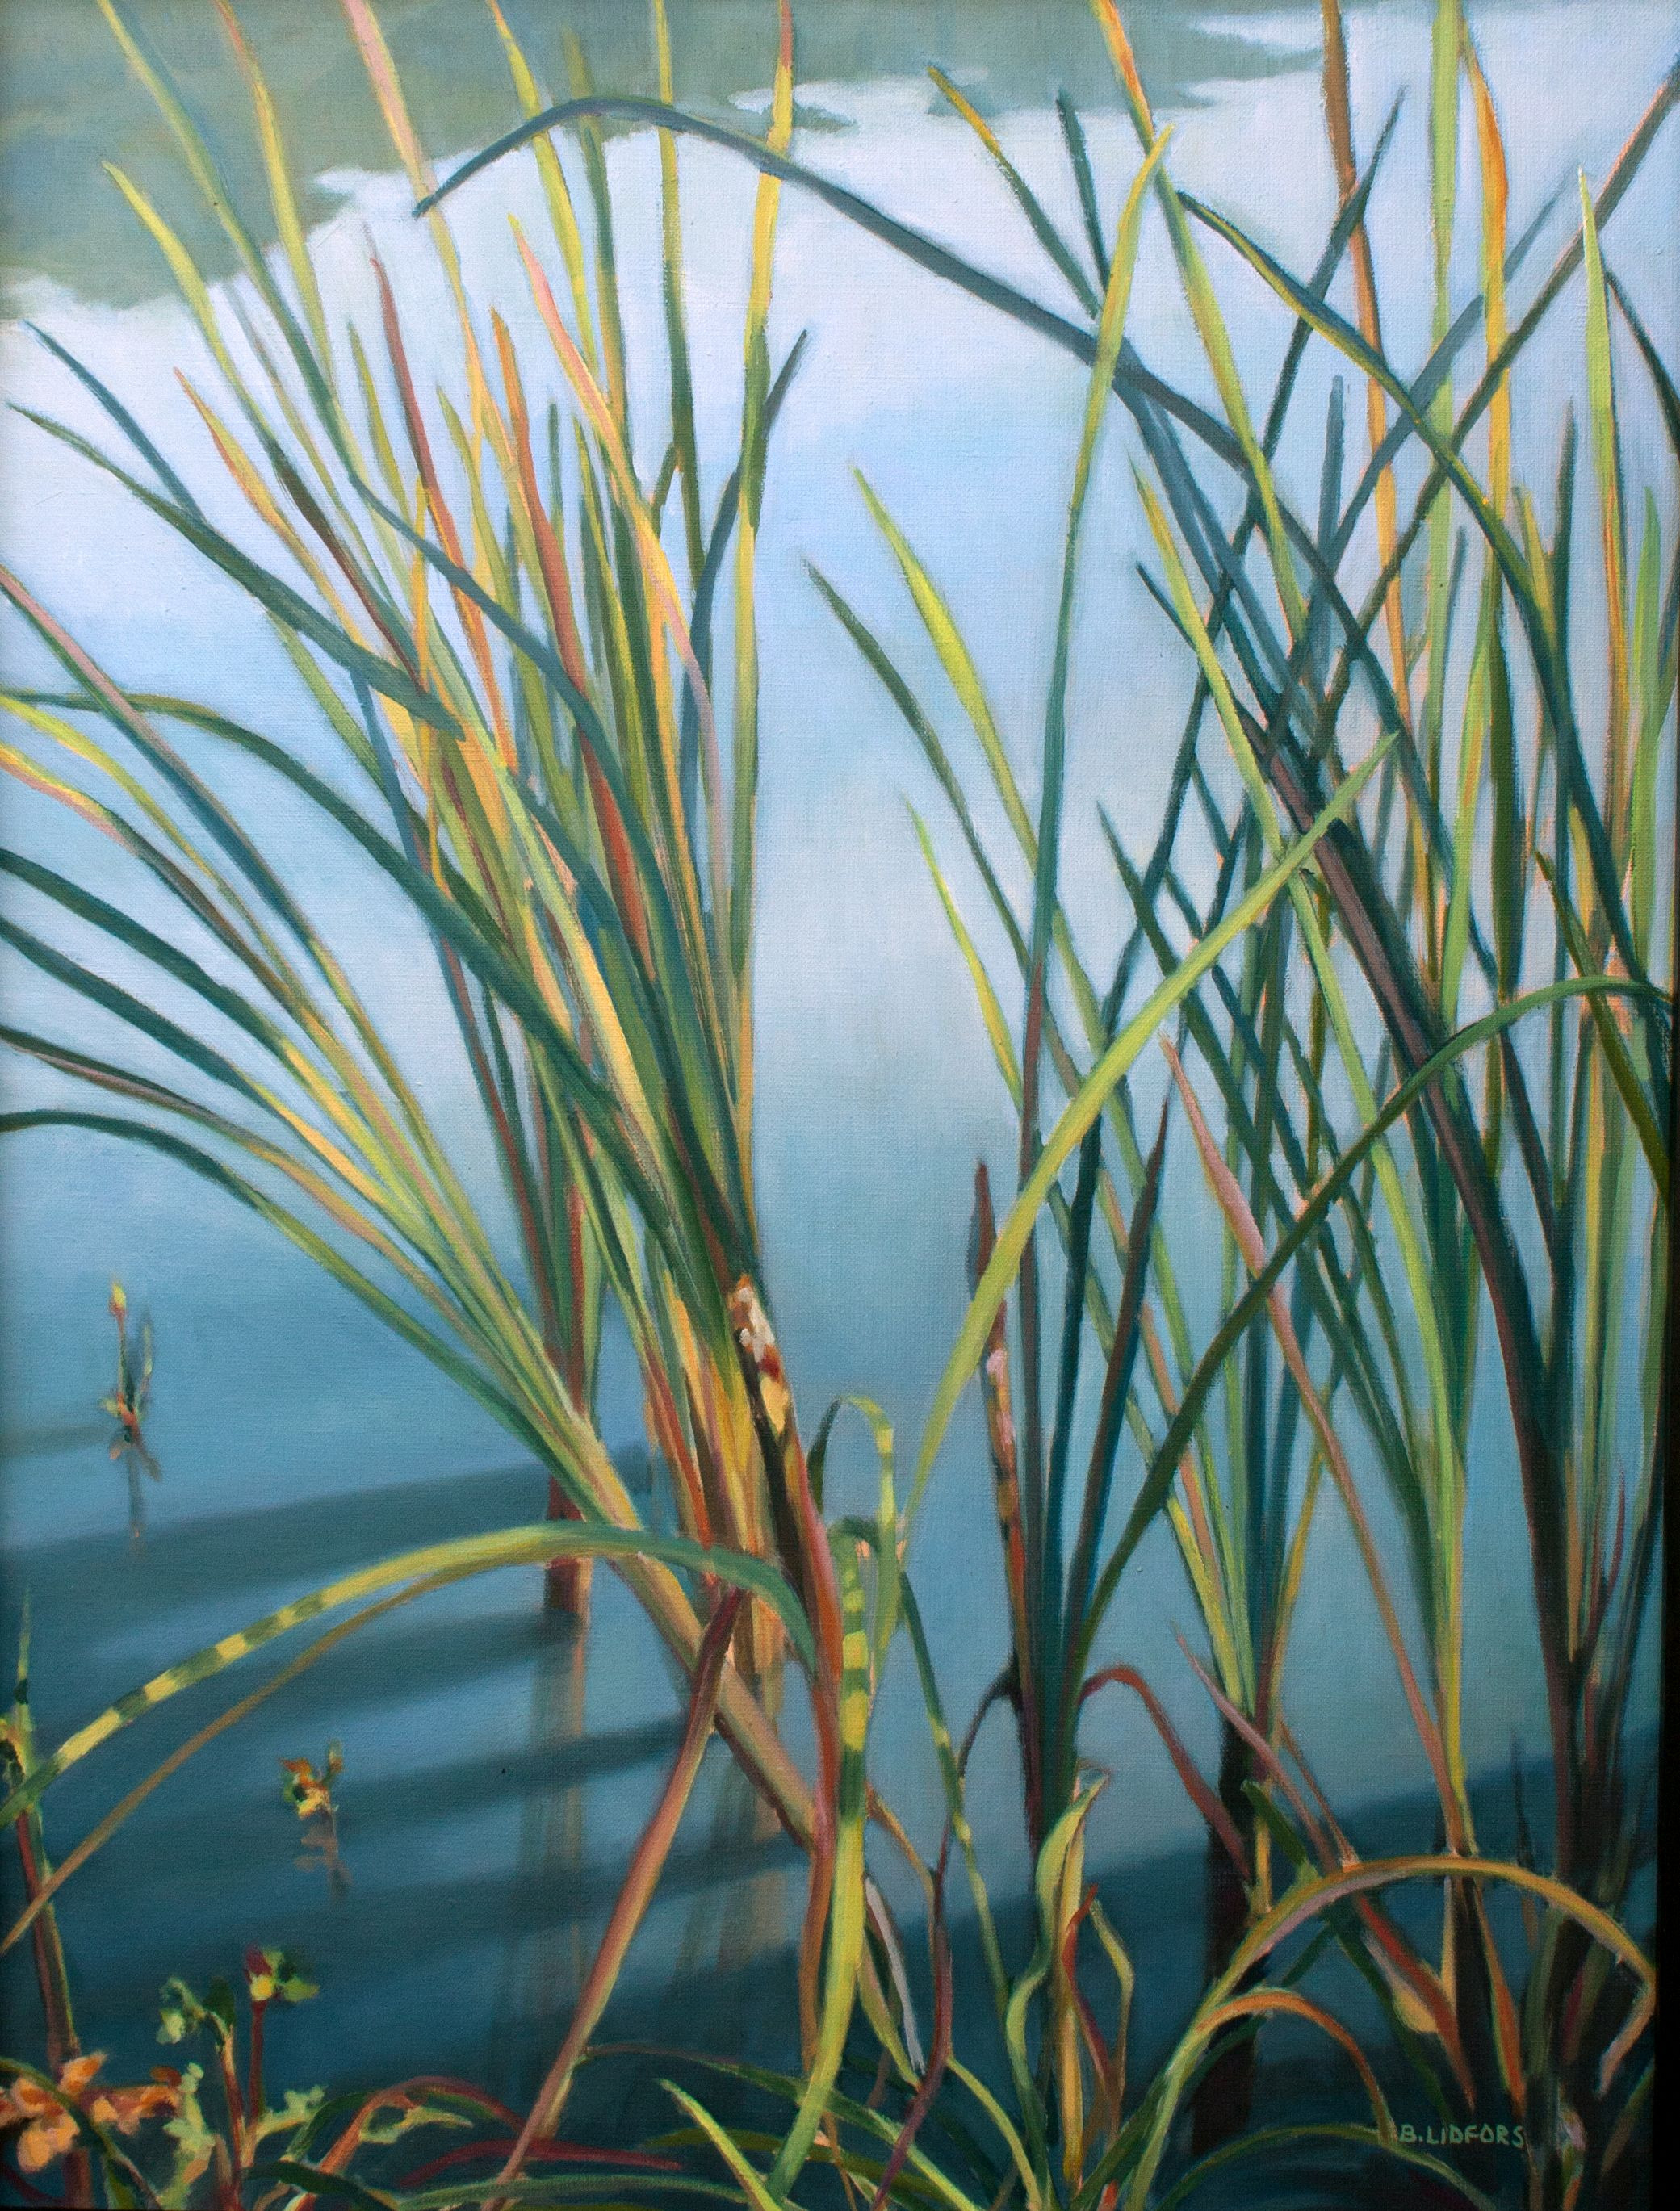 Barbara.lidfors.grasses by the water ps tdehuz